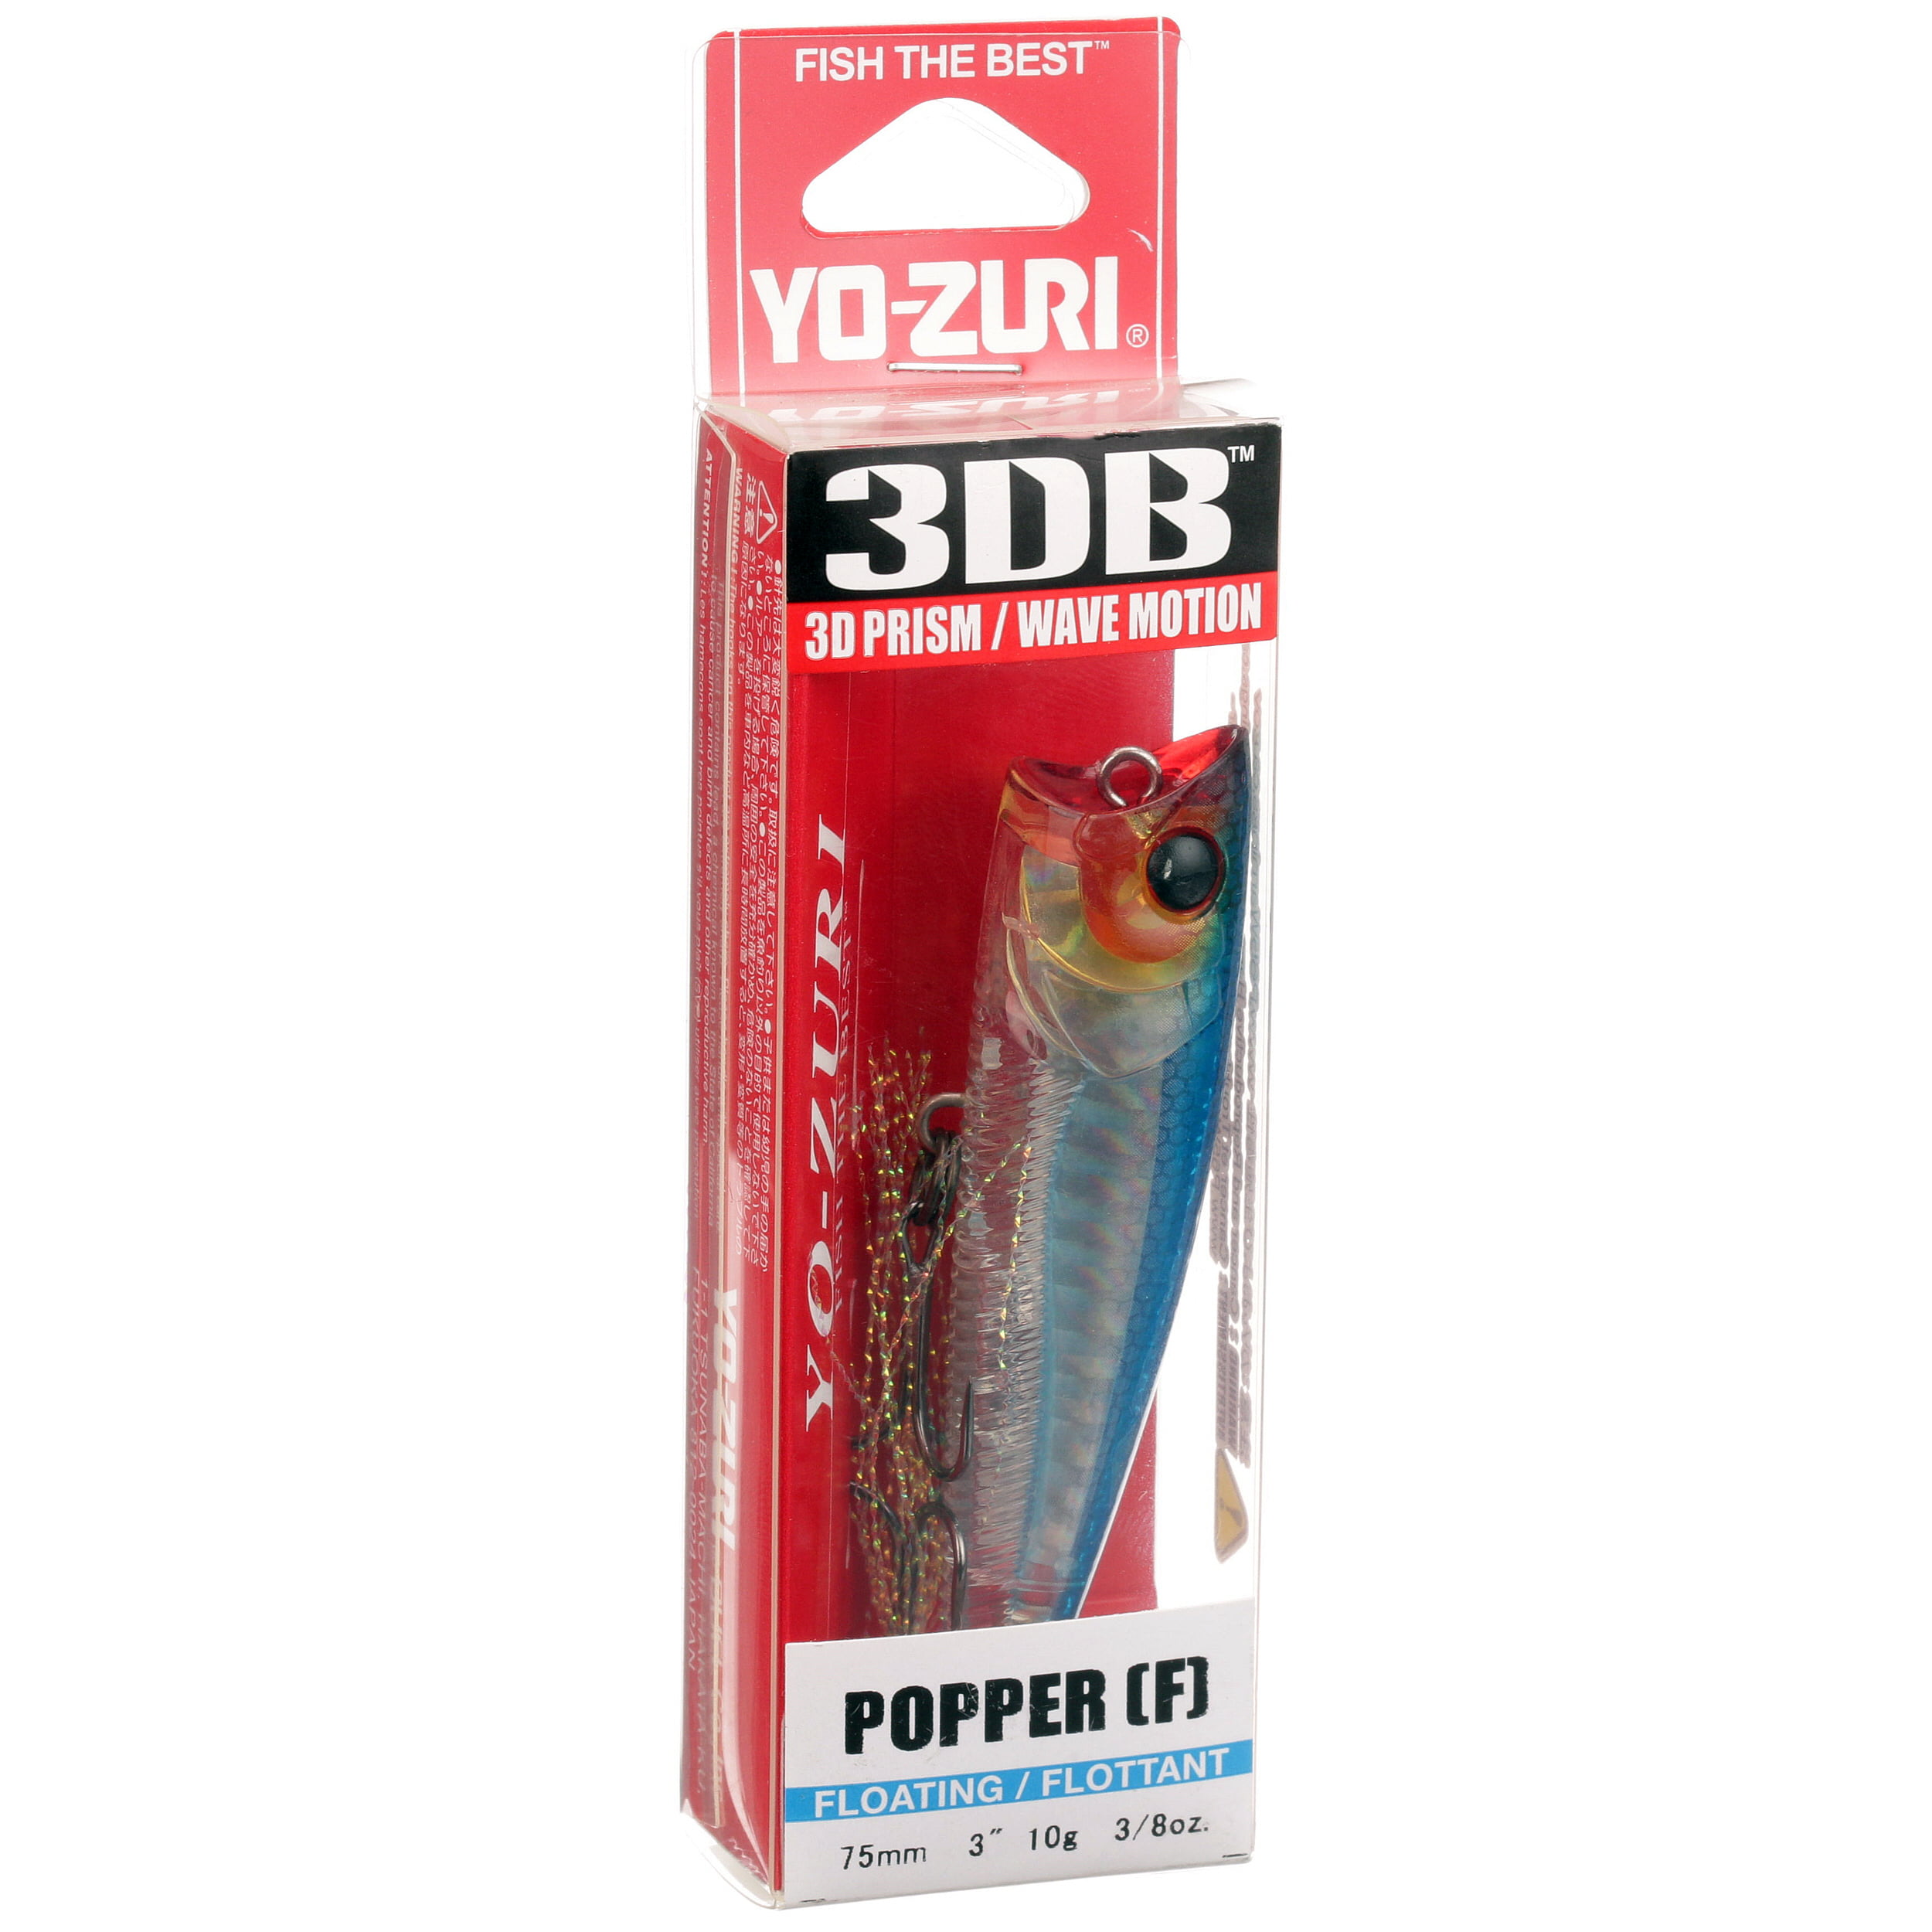 Yo-Zuri America 3DB Popper (F), 75mm, 3, Topwater Lure 